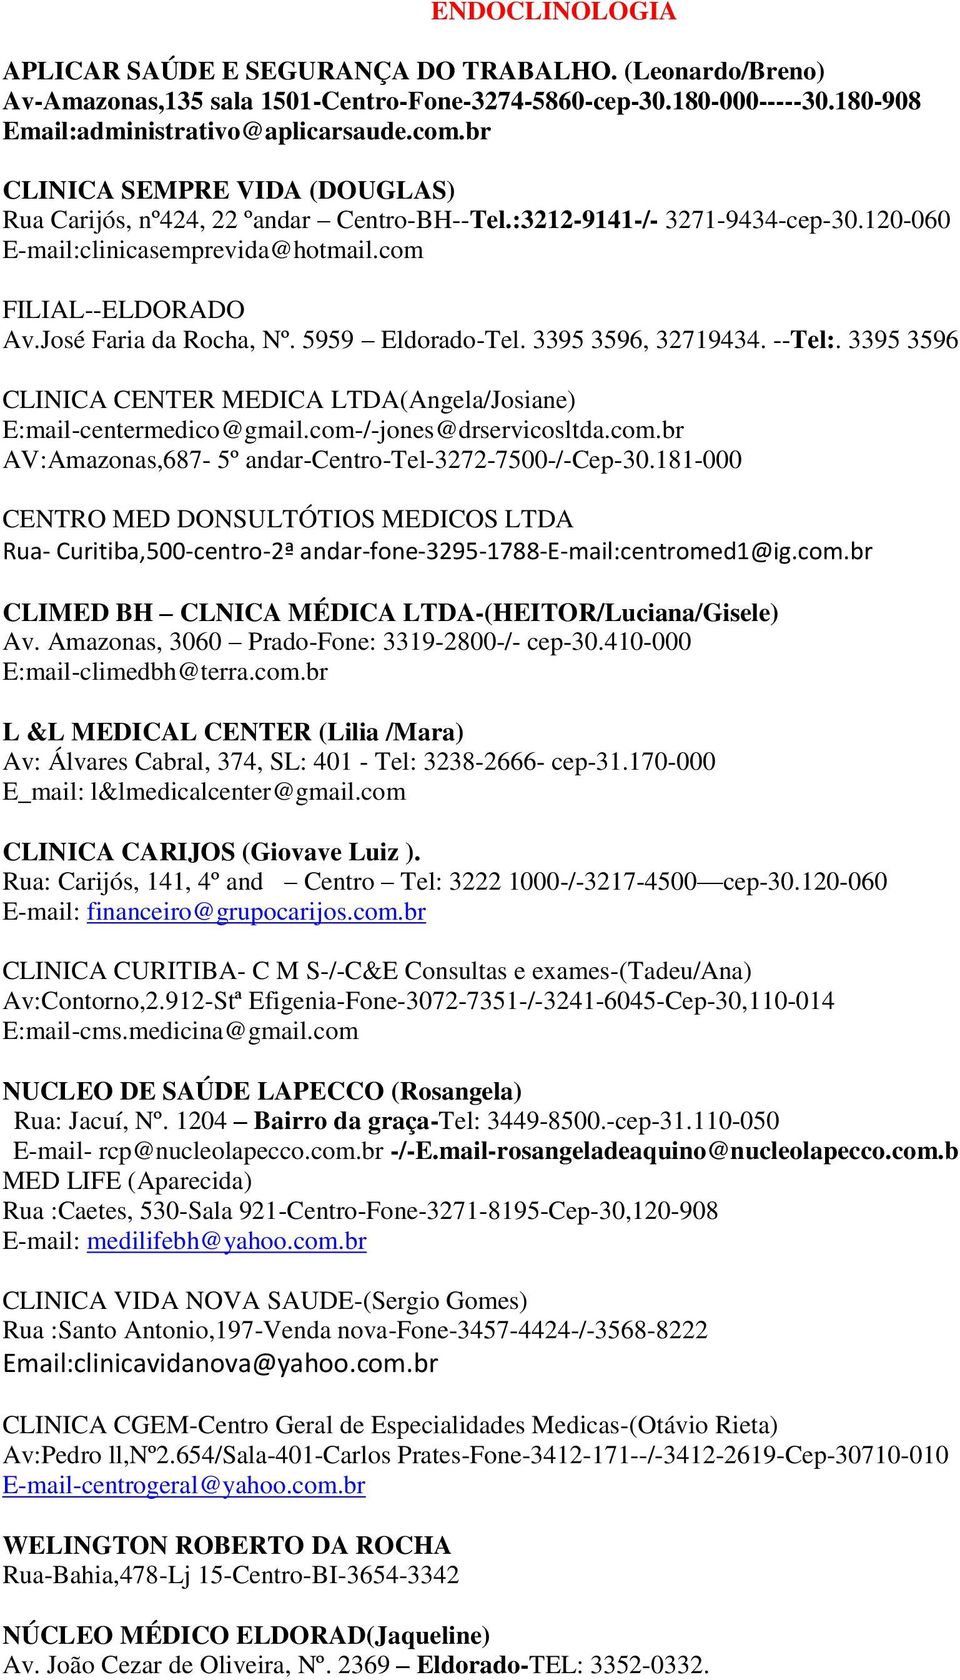 /-jones@drservicosltda.com.br AV:Amazonas,687-5º andar-centro-tel-3272-7500-/-cep-30.181-000 CENTRO MED DONSULTÓTIOS MEDICOS LTDA Rua- Curitiba,500-centro-2ª andar-fone-3295-1788-e-mail:centromed1@ig.